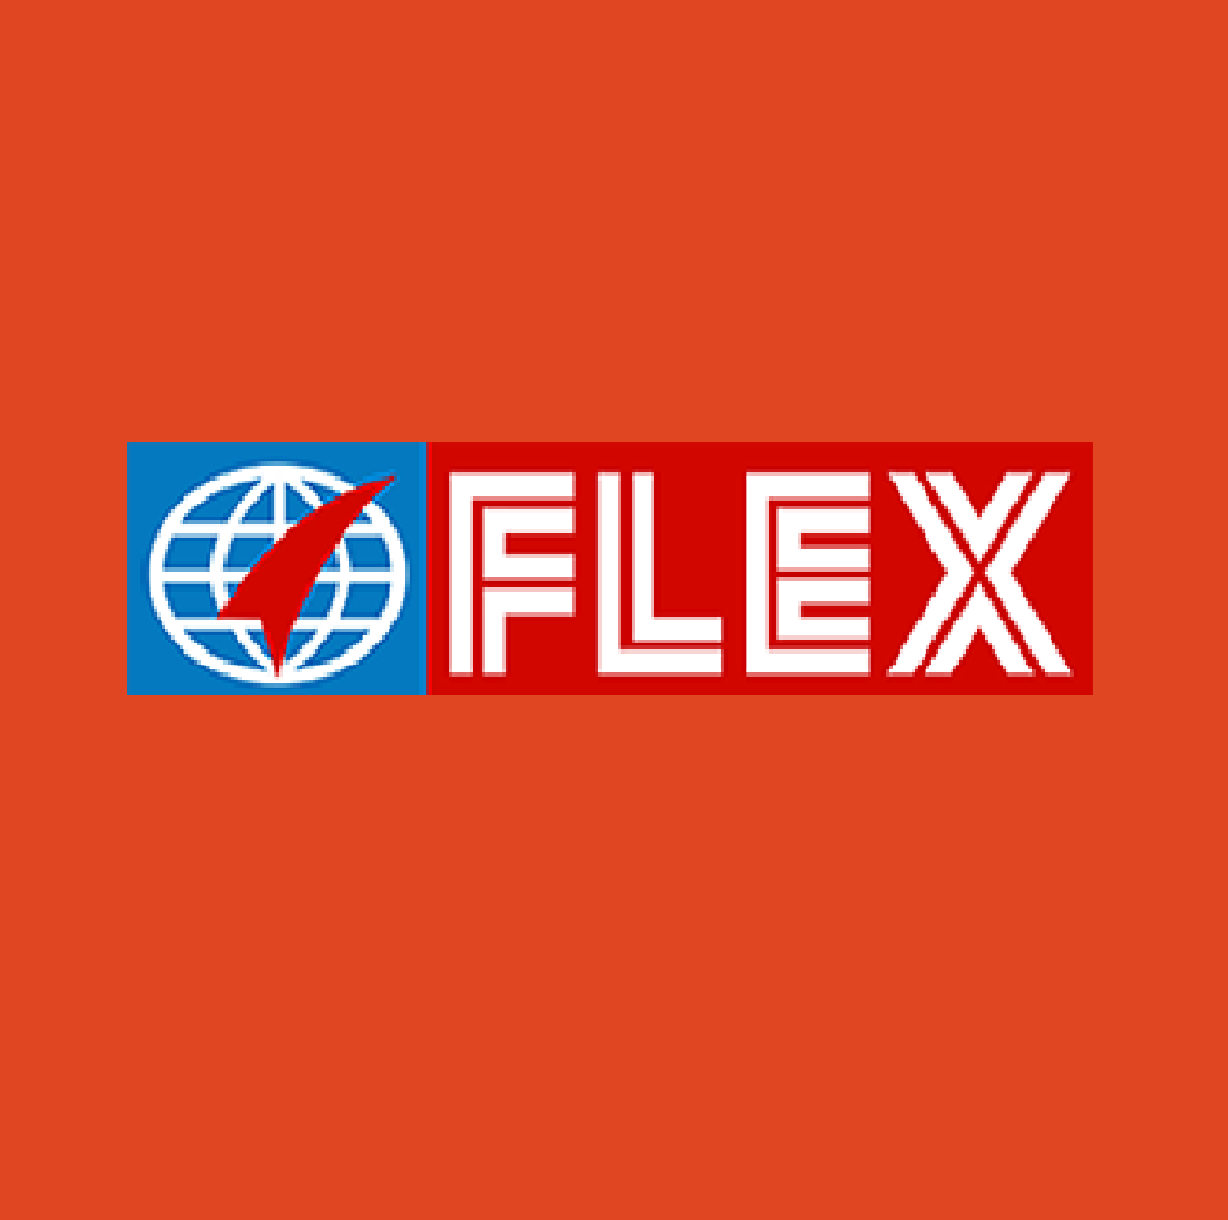 Flex P. Films Egypt